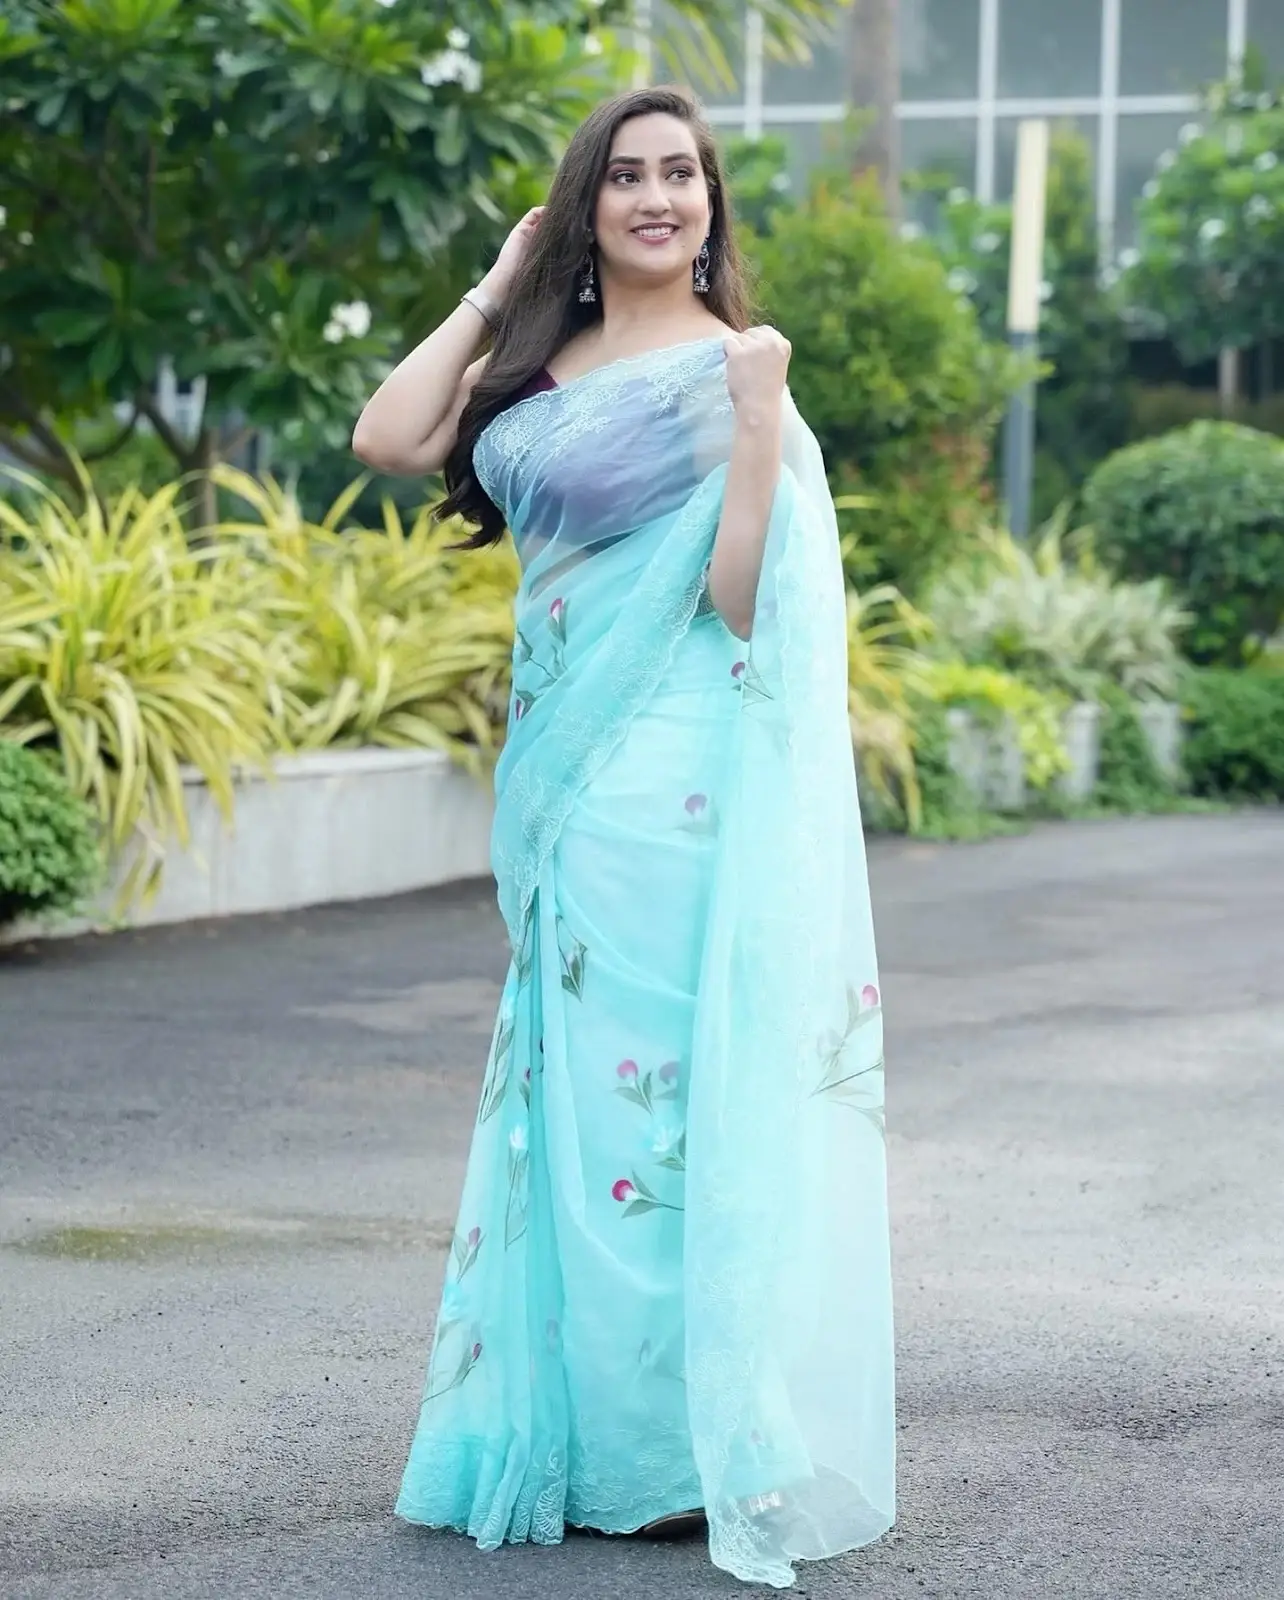 INDIAS MOST BEAUTIFUL GIRL MANJUSHA RAMPALLI IN BLUE SAREE 5